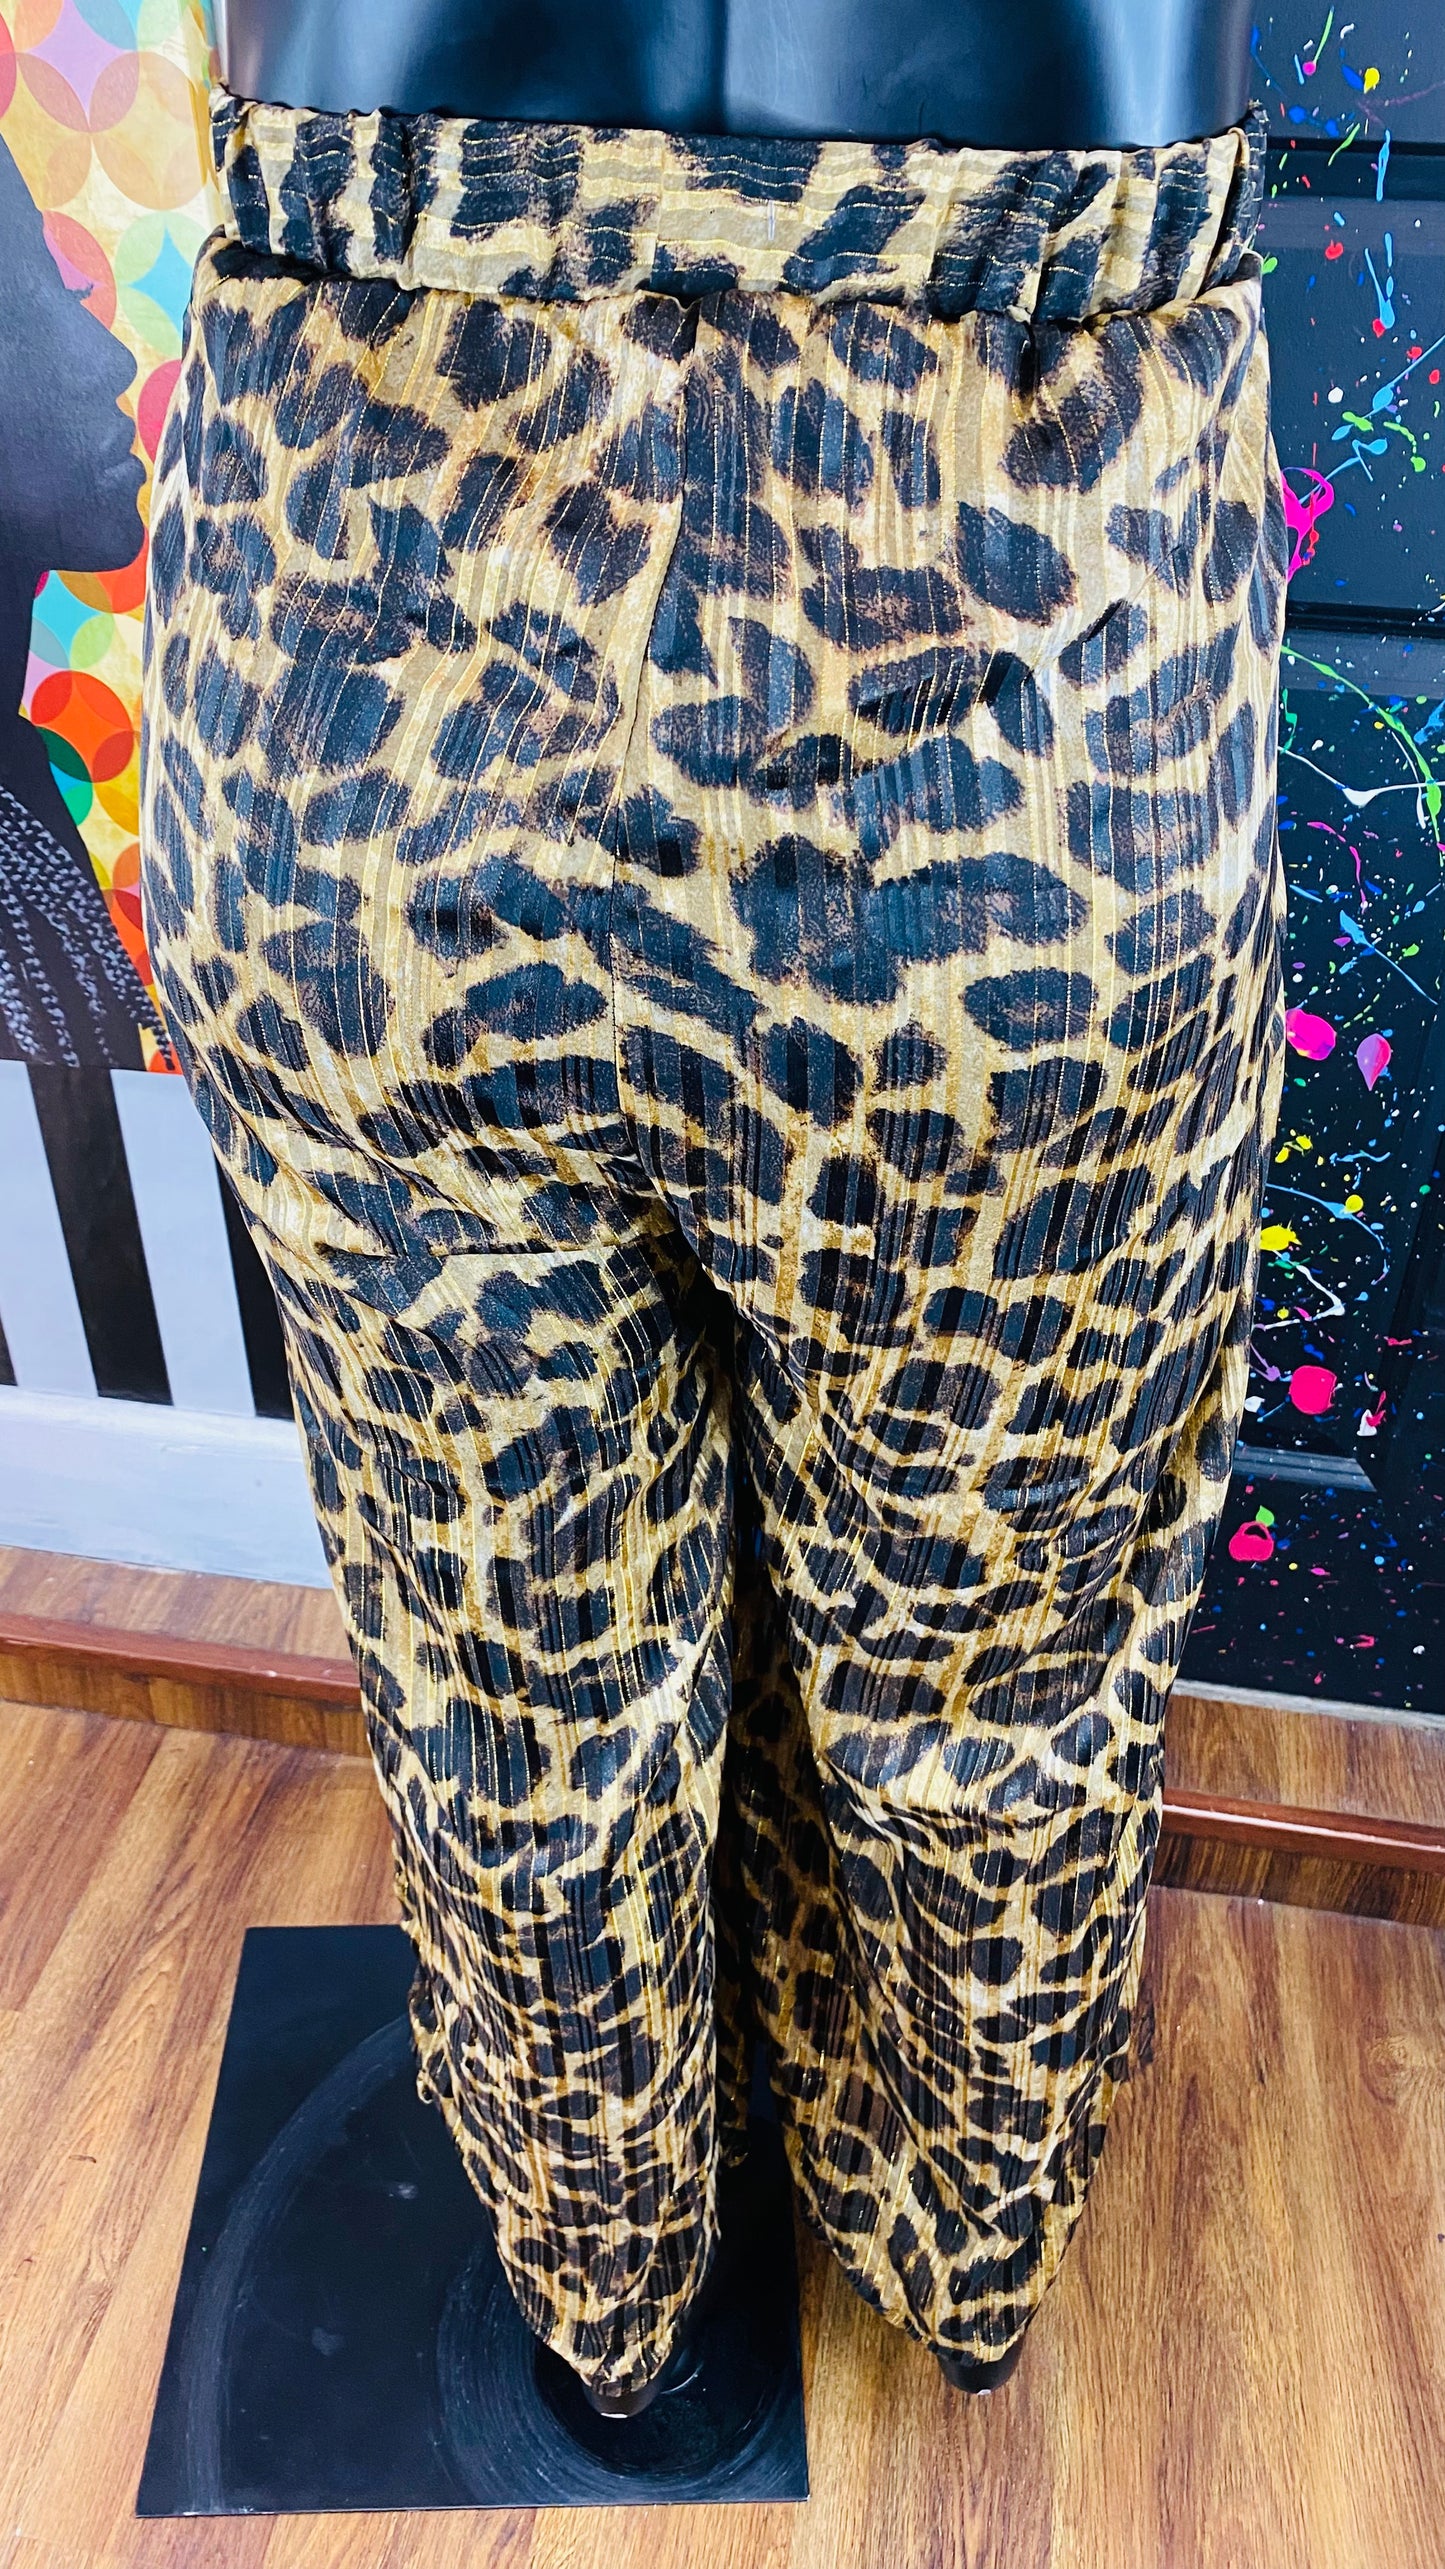 Spoon Tiger Print Pants